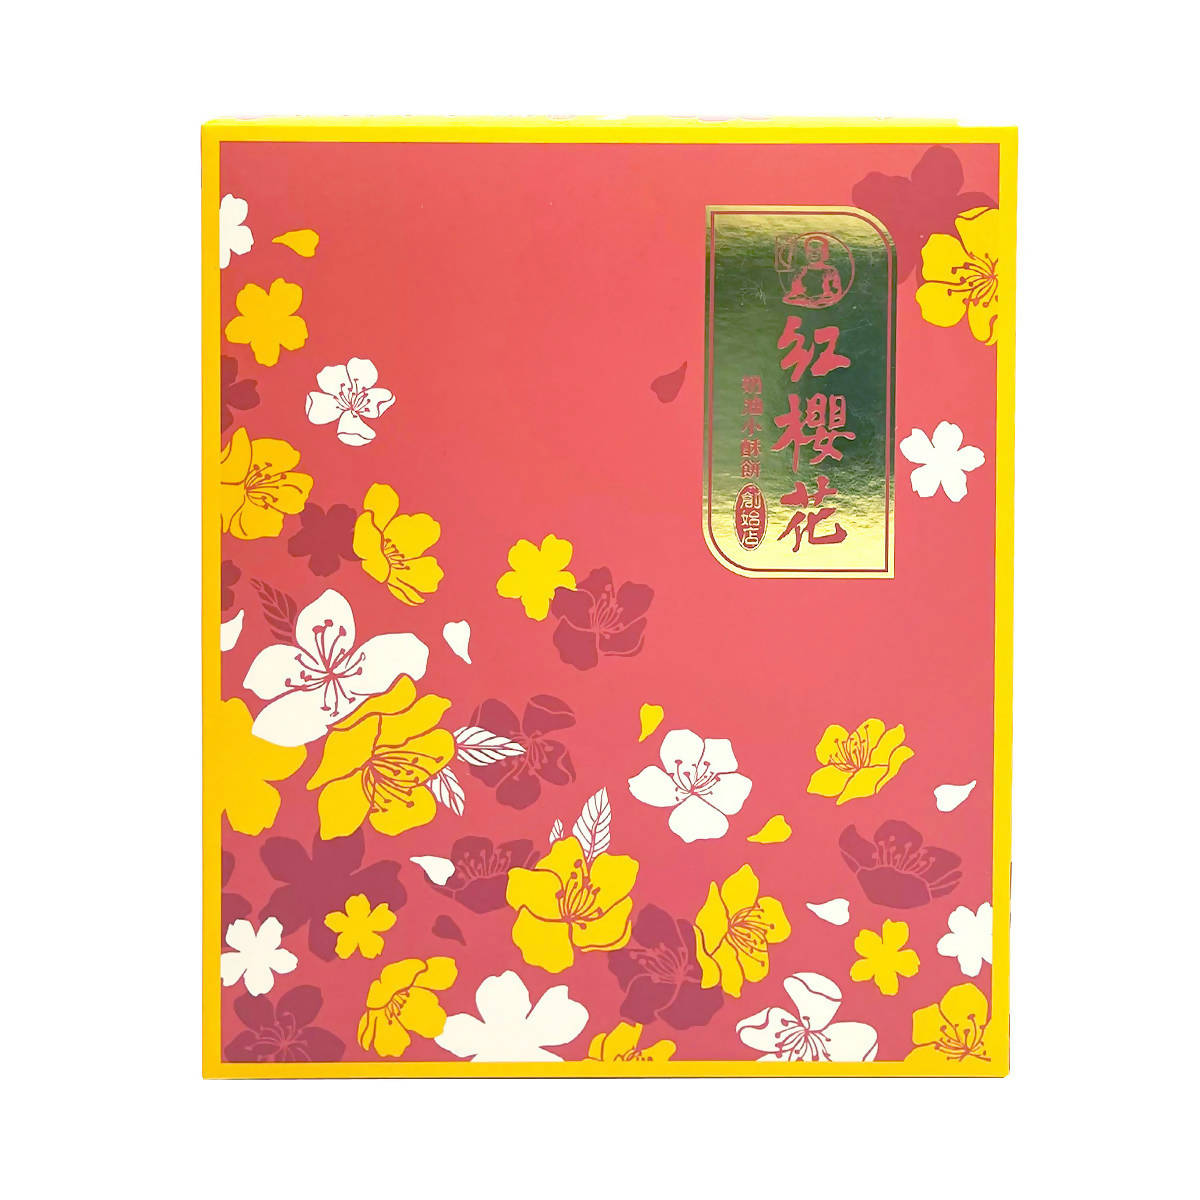 Taiwan Direct Mail【Red Cherry Blossoms】 RED SAKURA Cream Shortbread (Original) 520g 8pcs 